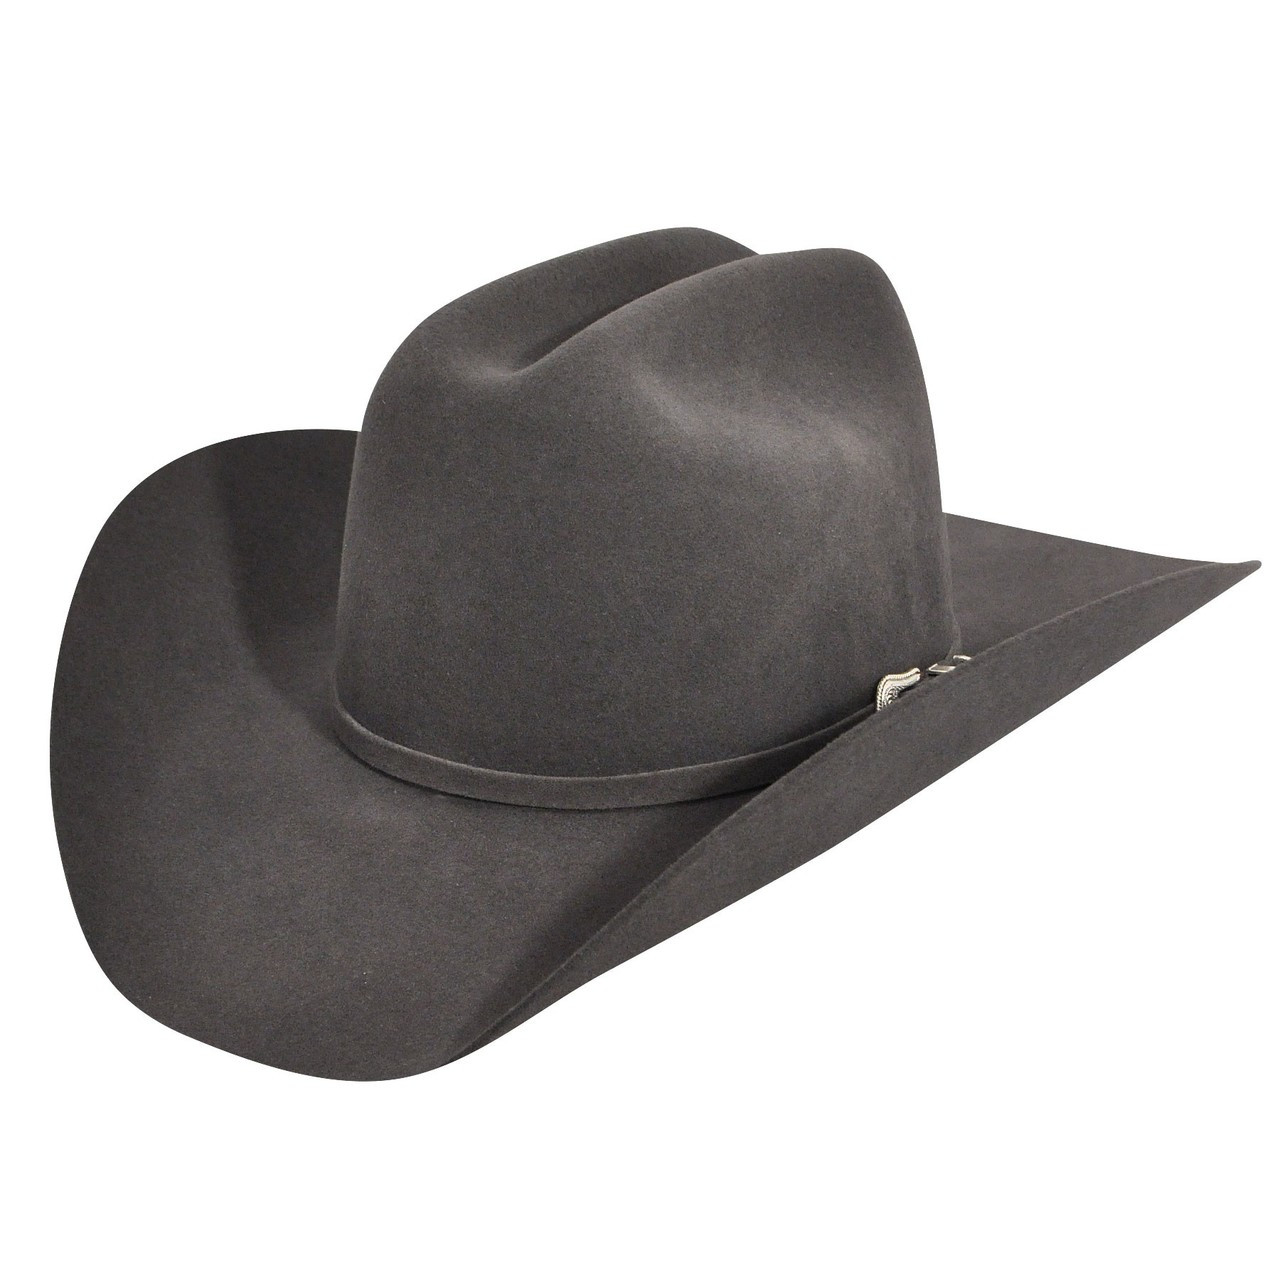 M&F Dakota Brown Crushable Felt Western Cowboy Hat - Jackson's Western